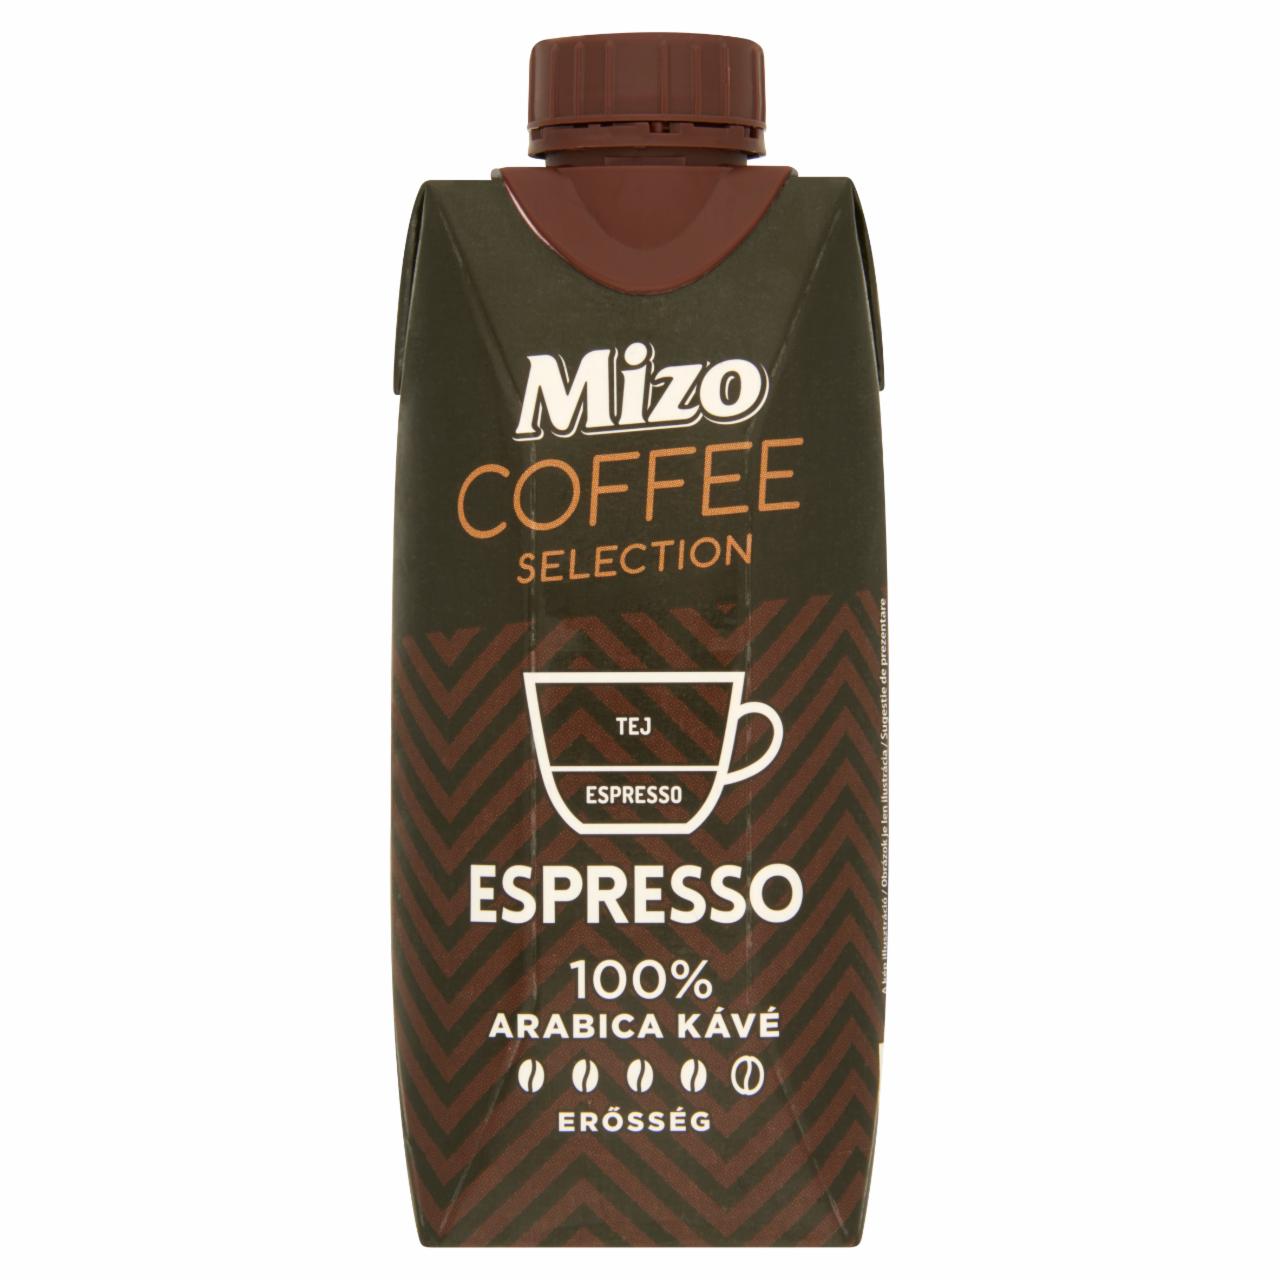 Képek - Mizo Coffee Selection Espresso